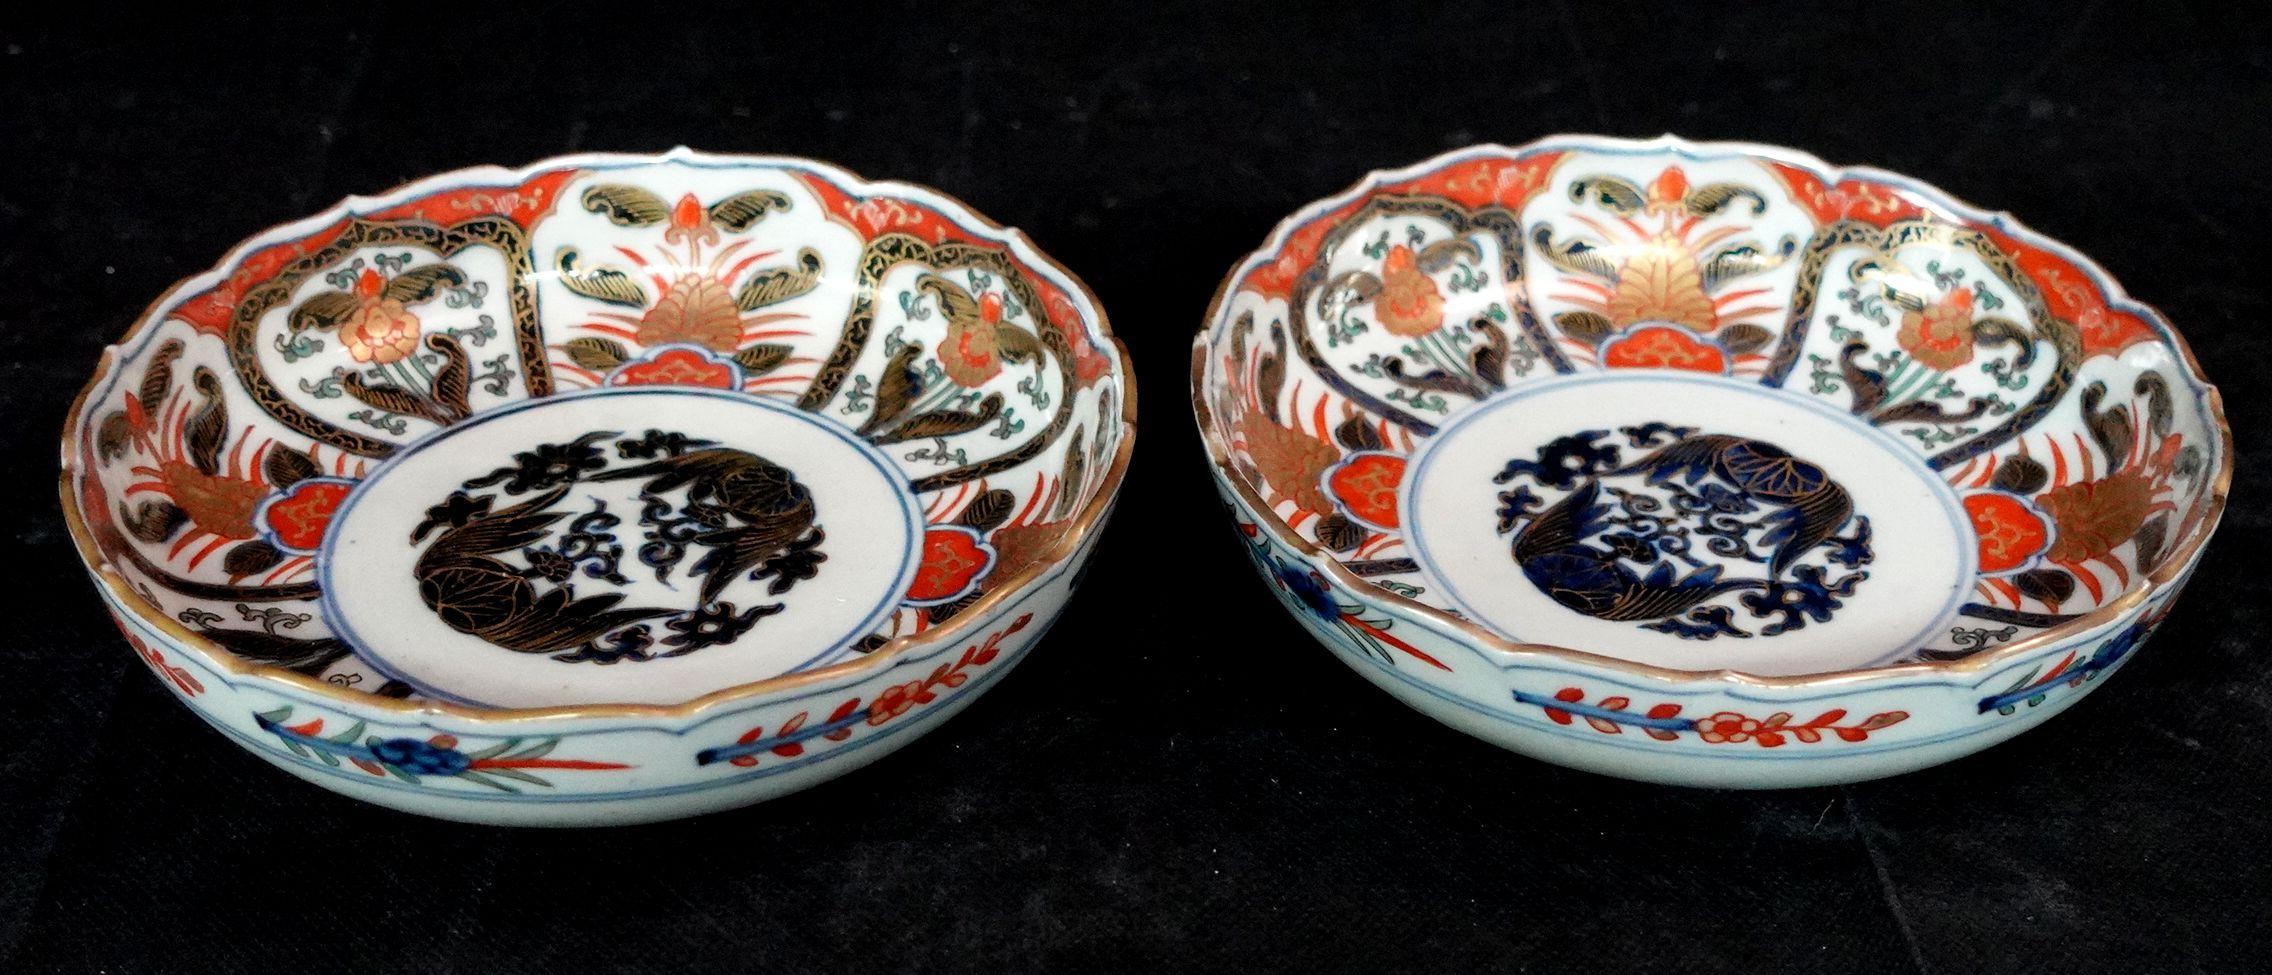 Pair of Japanese Imari Plates, 19th Century, RIc 055 For Sale 4